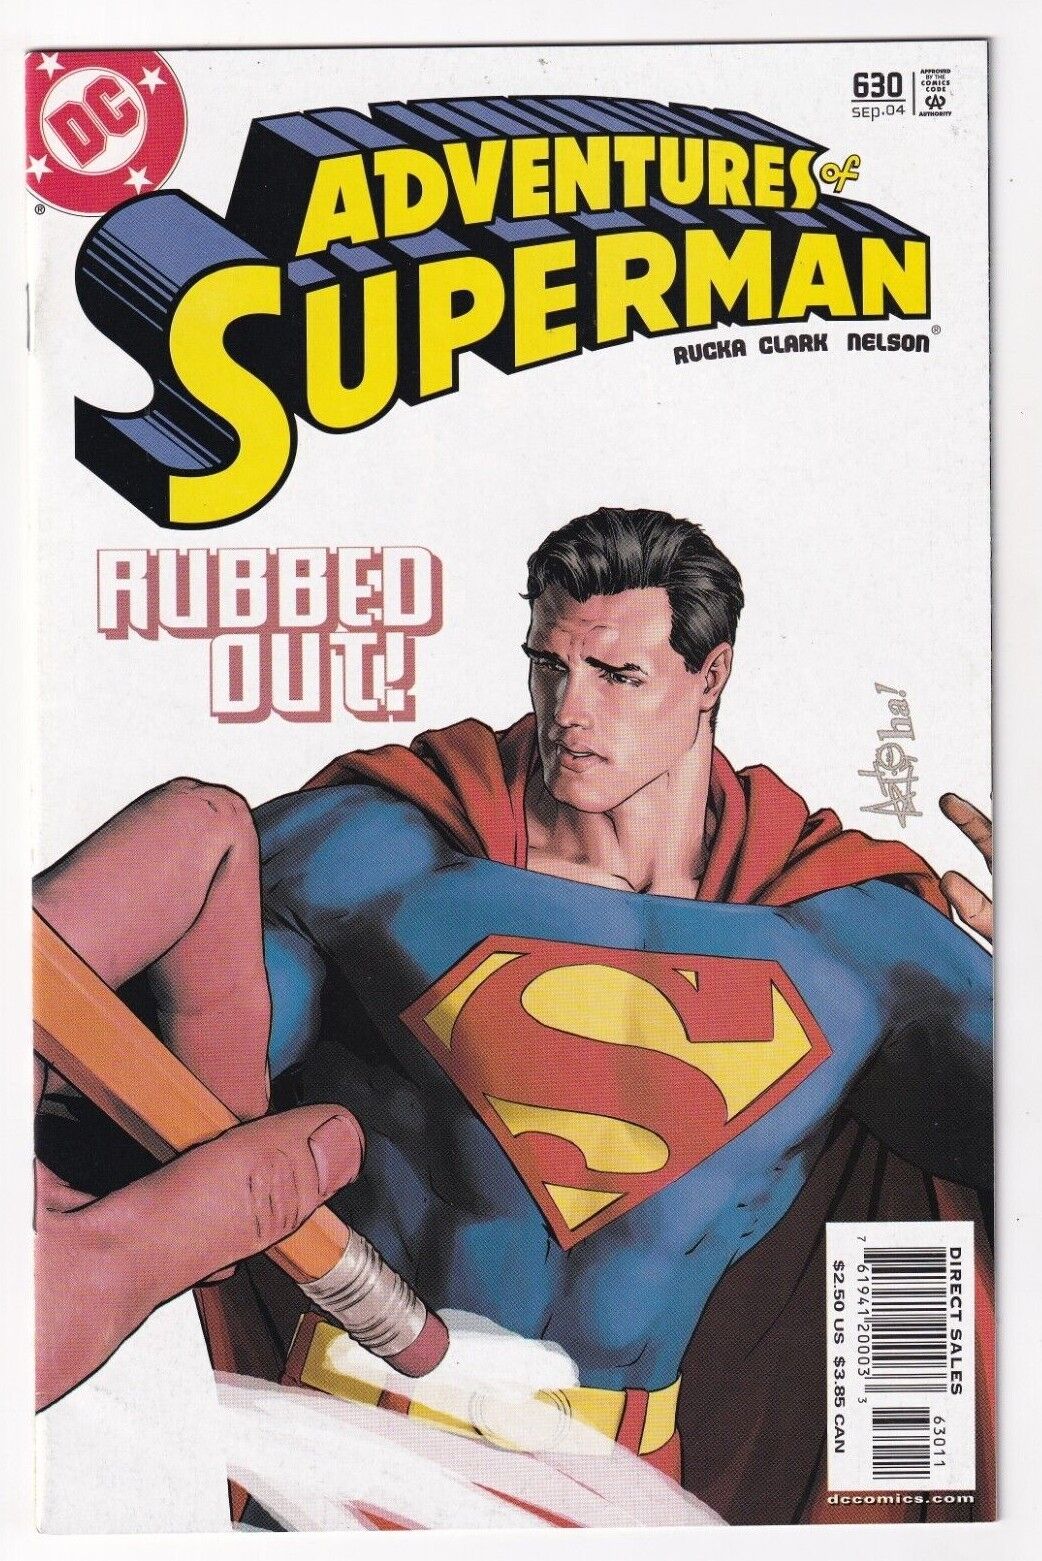 Adventures Of Superman #630 September 2004 Greg Rucka Matthew Clark Nelson